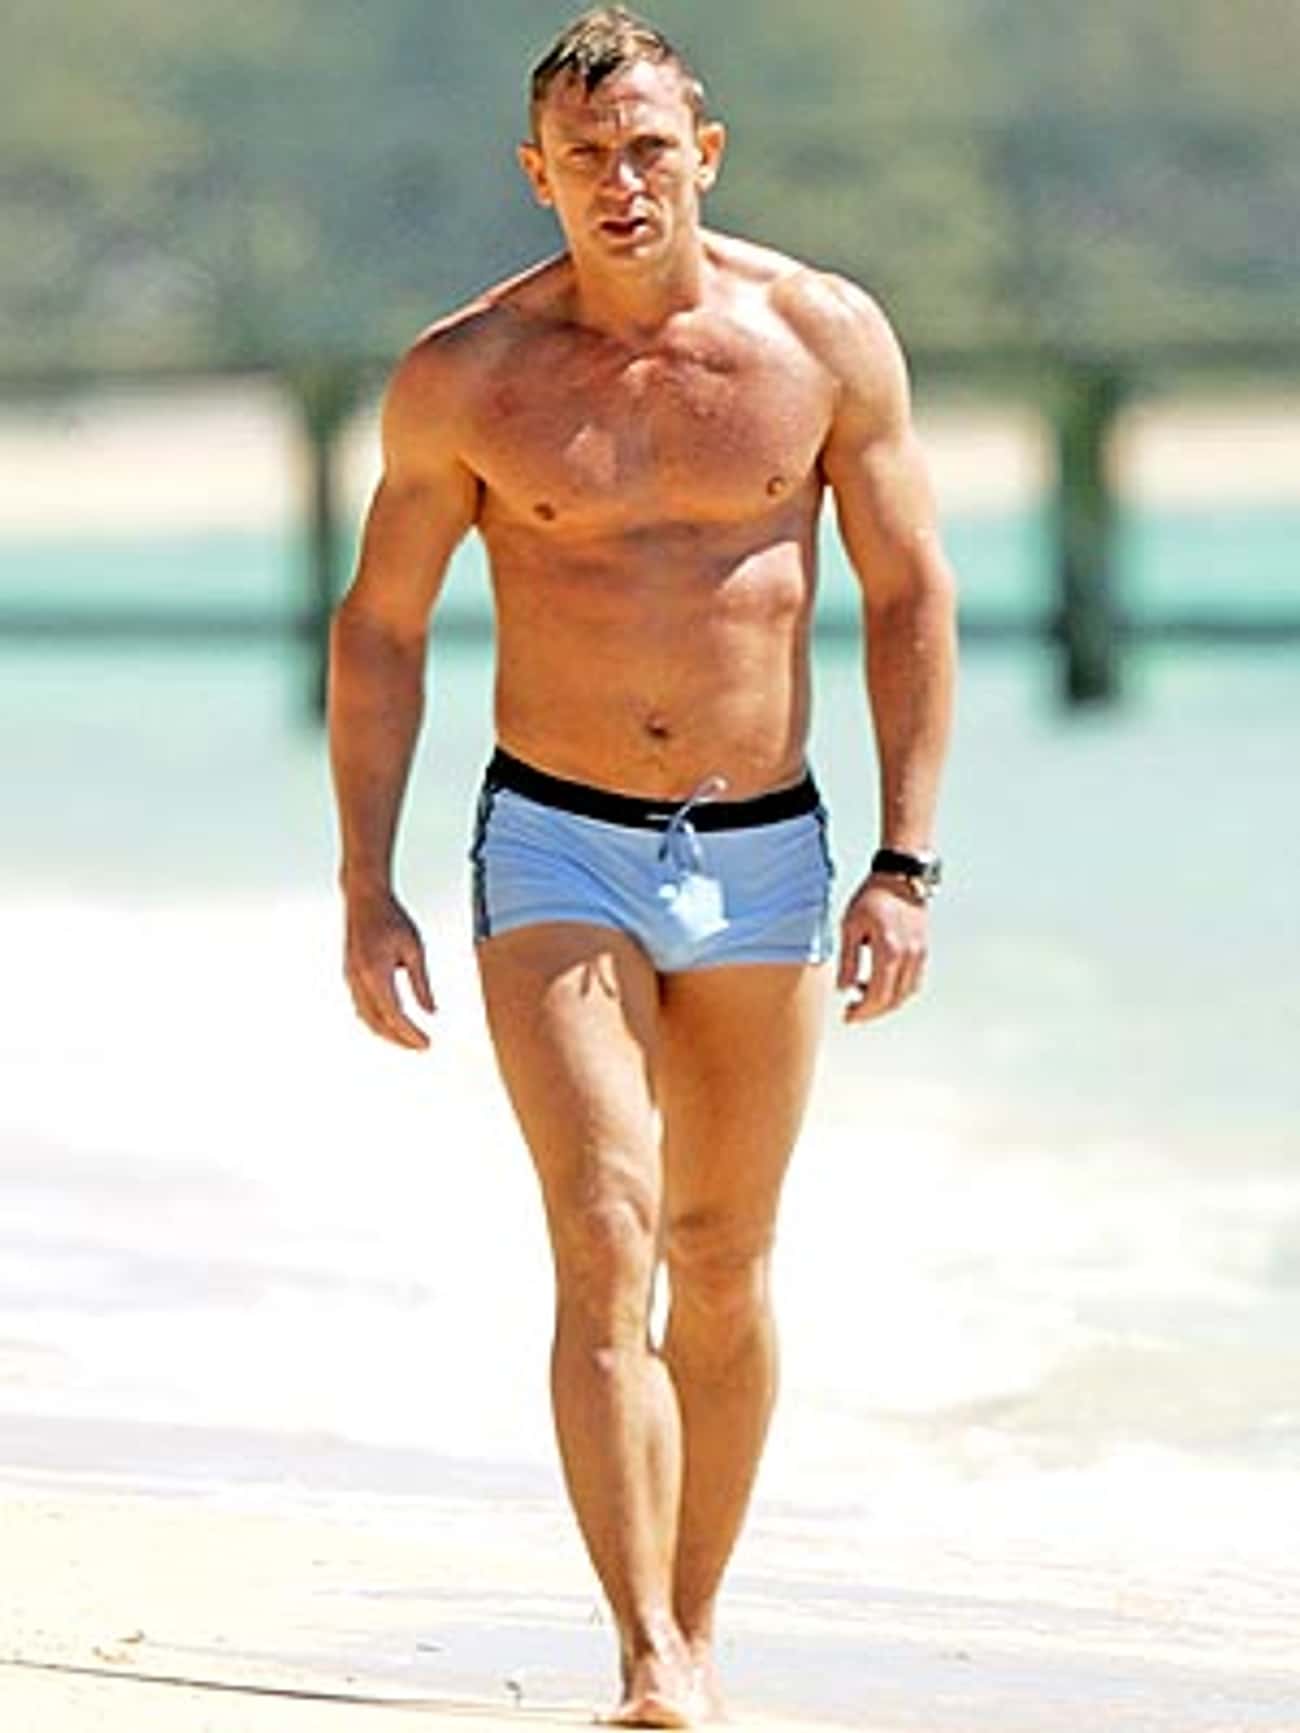 Daniel Craig In Beach Boxer Short All People Photo U1?auto=format&q=60&fit=crop&fm=pjpg&dpr=2&w=650